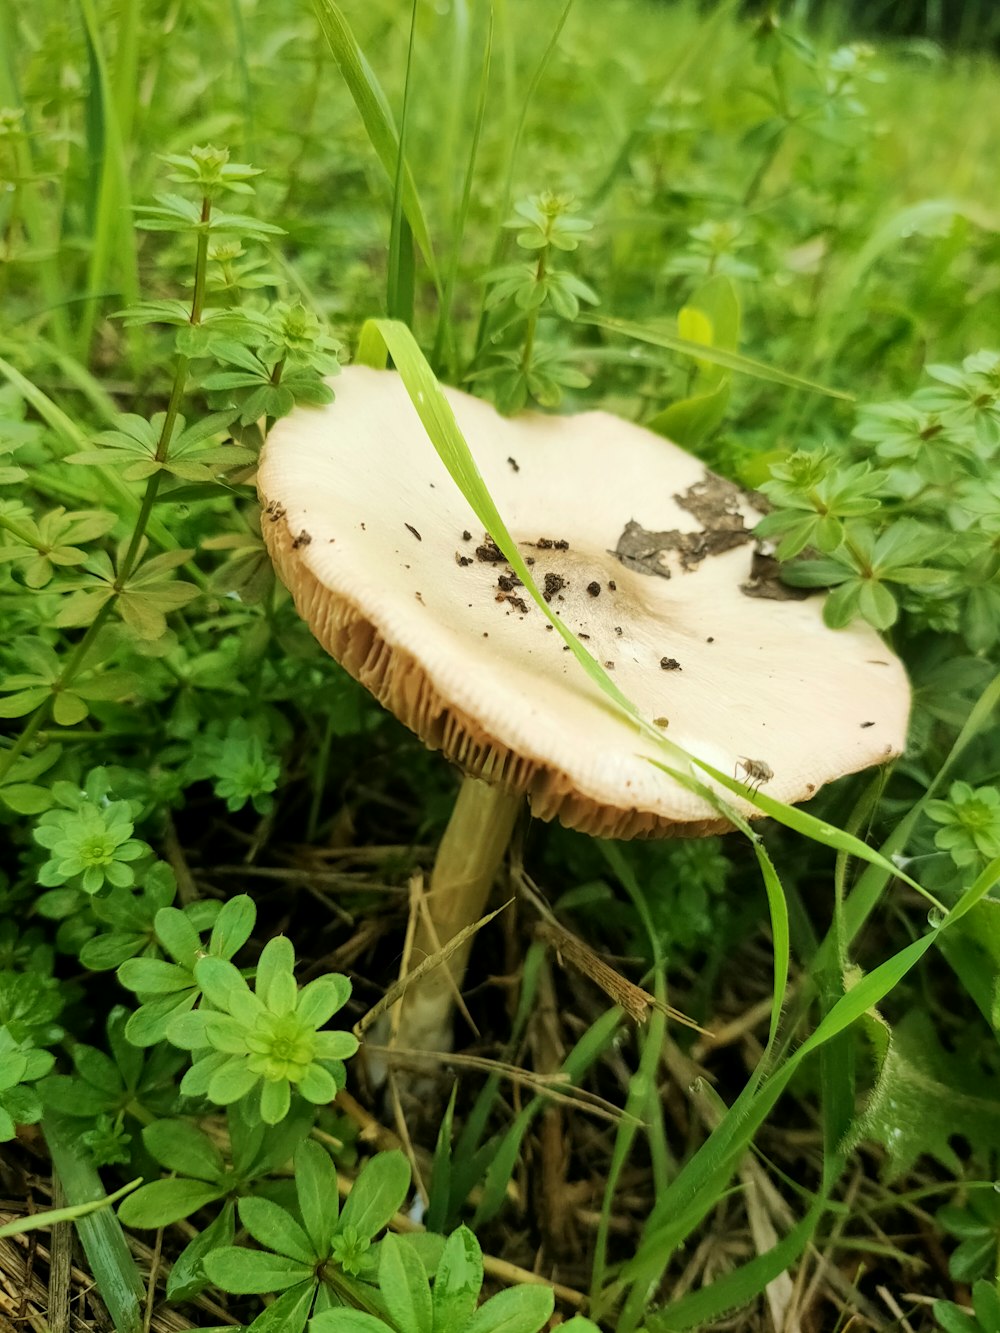 a mushroom sitting on top of a lush green field